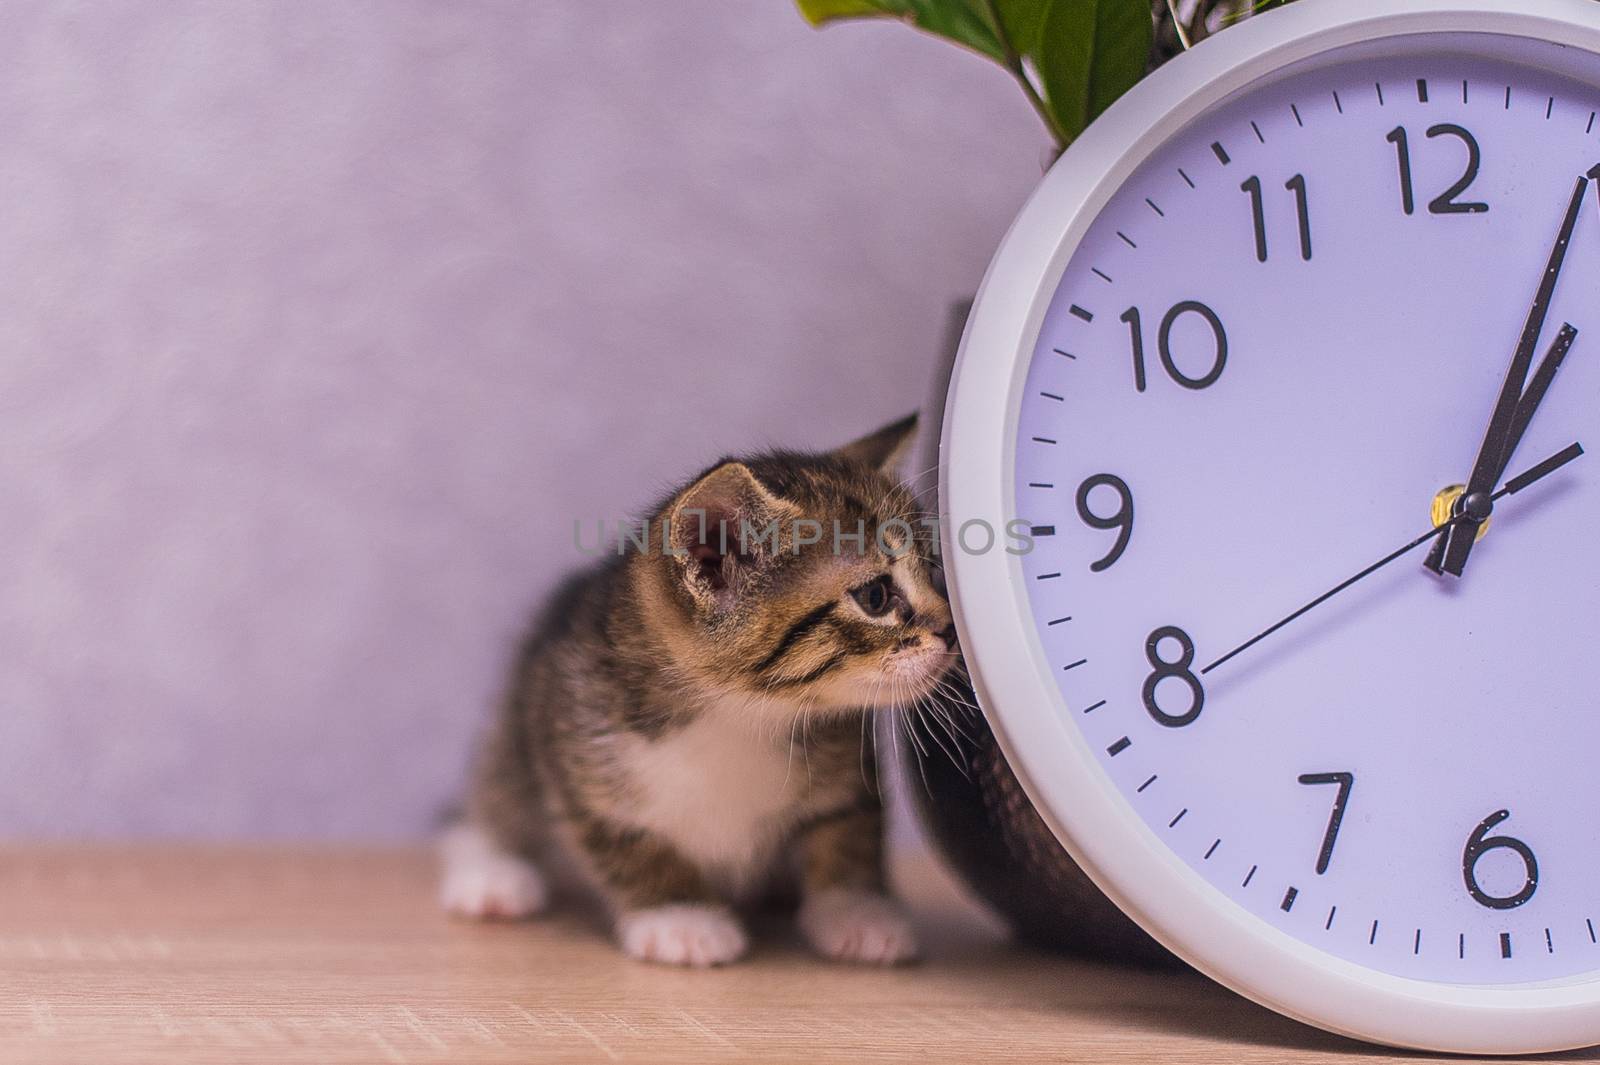 striped kitten sniffs a clock on a wooden table